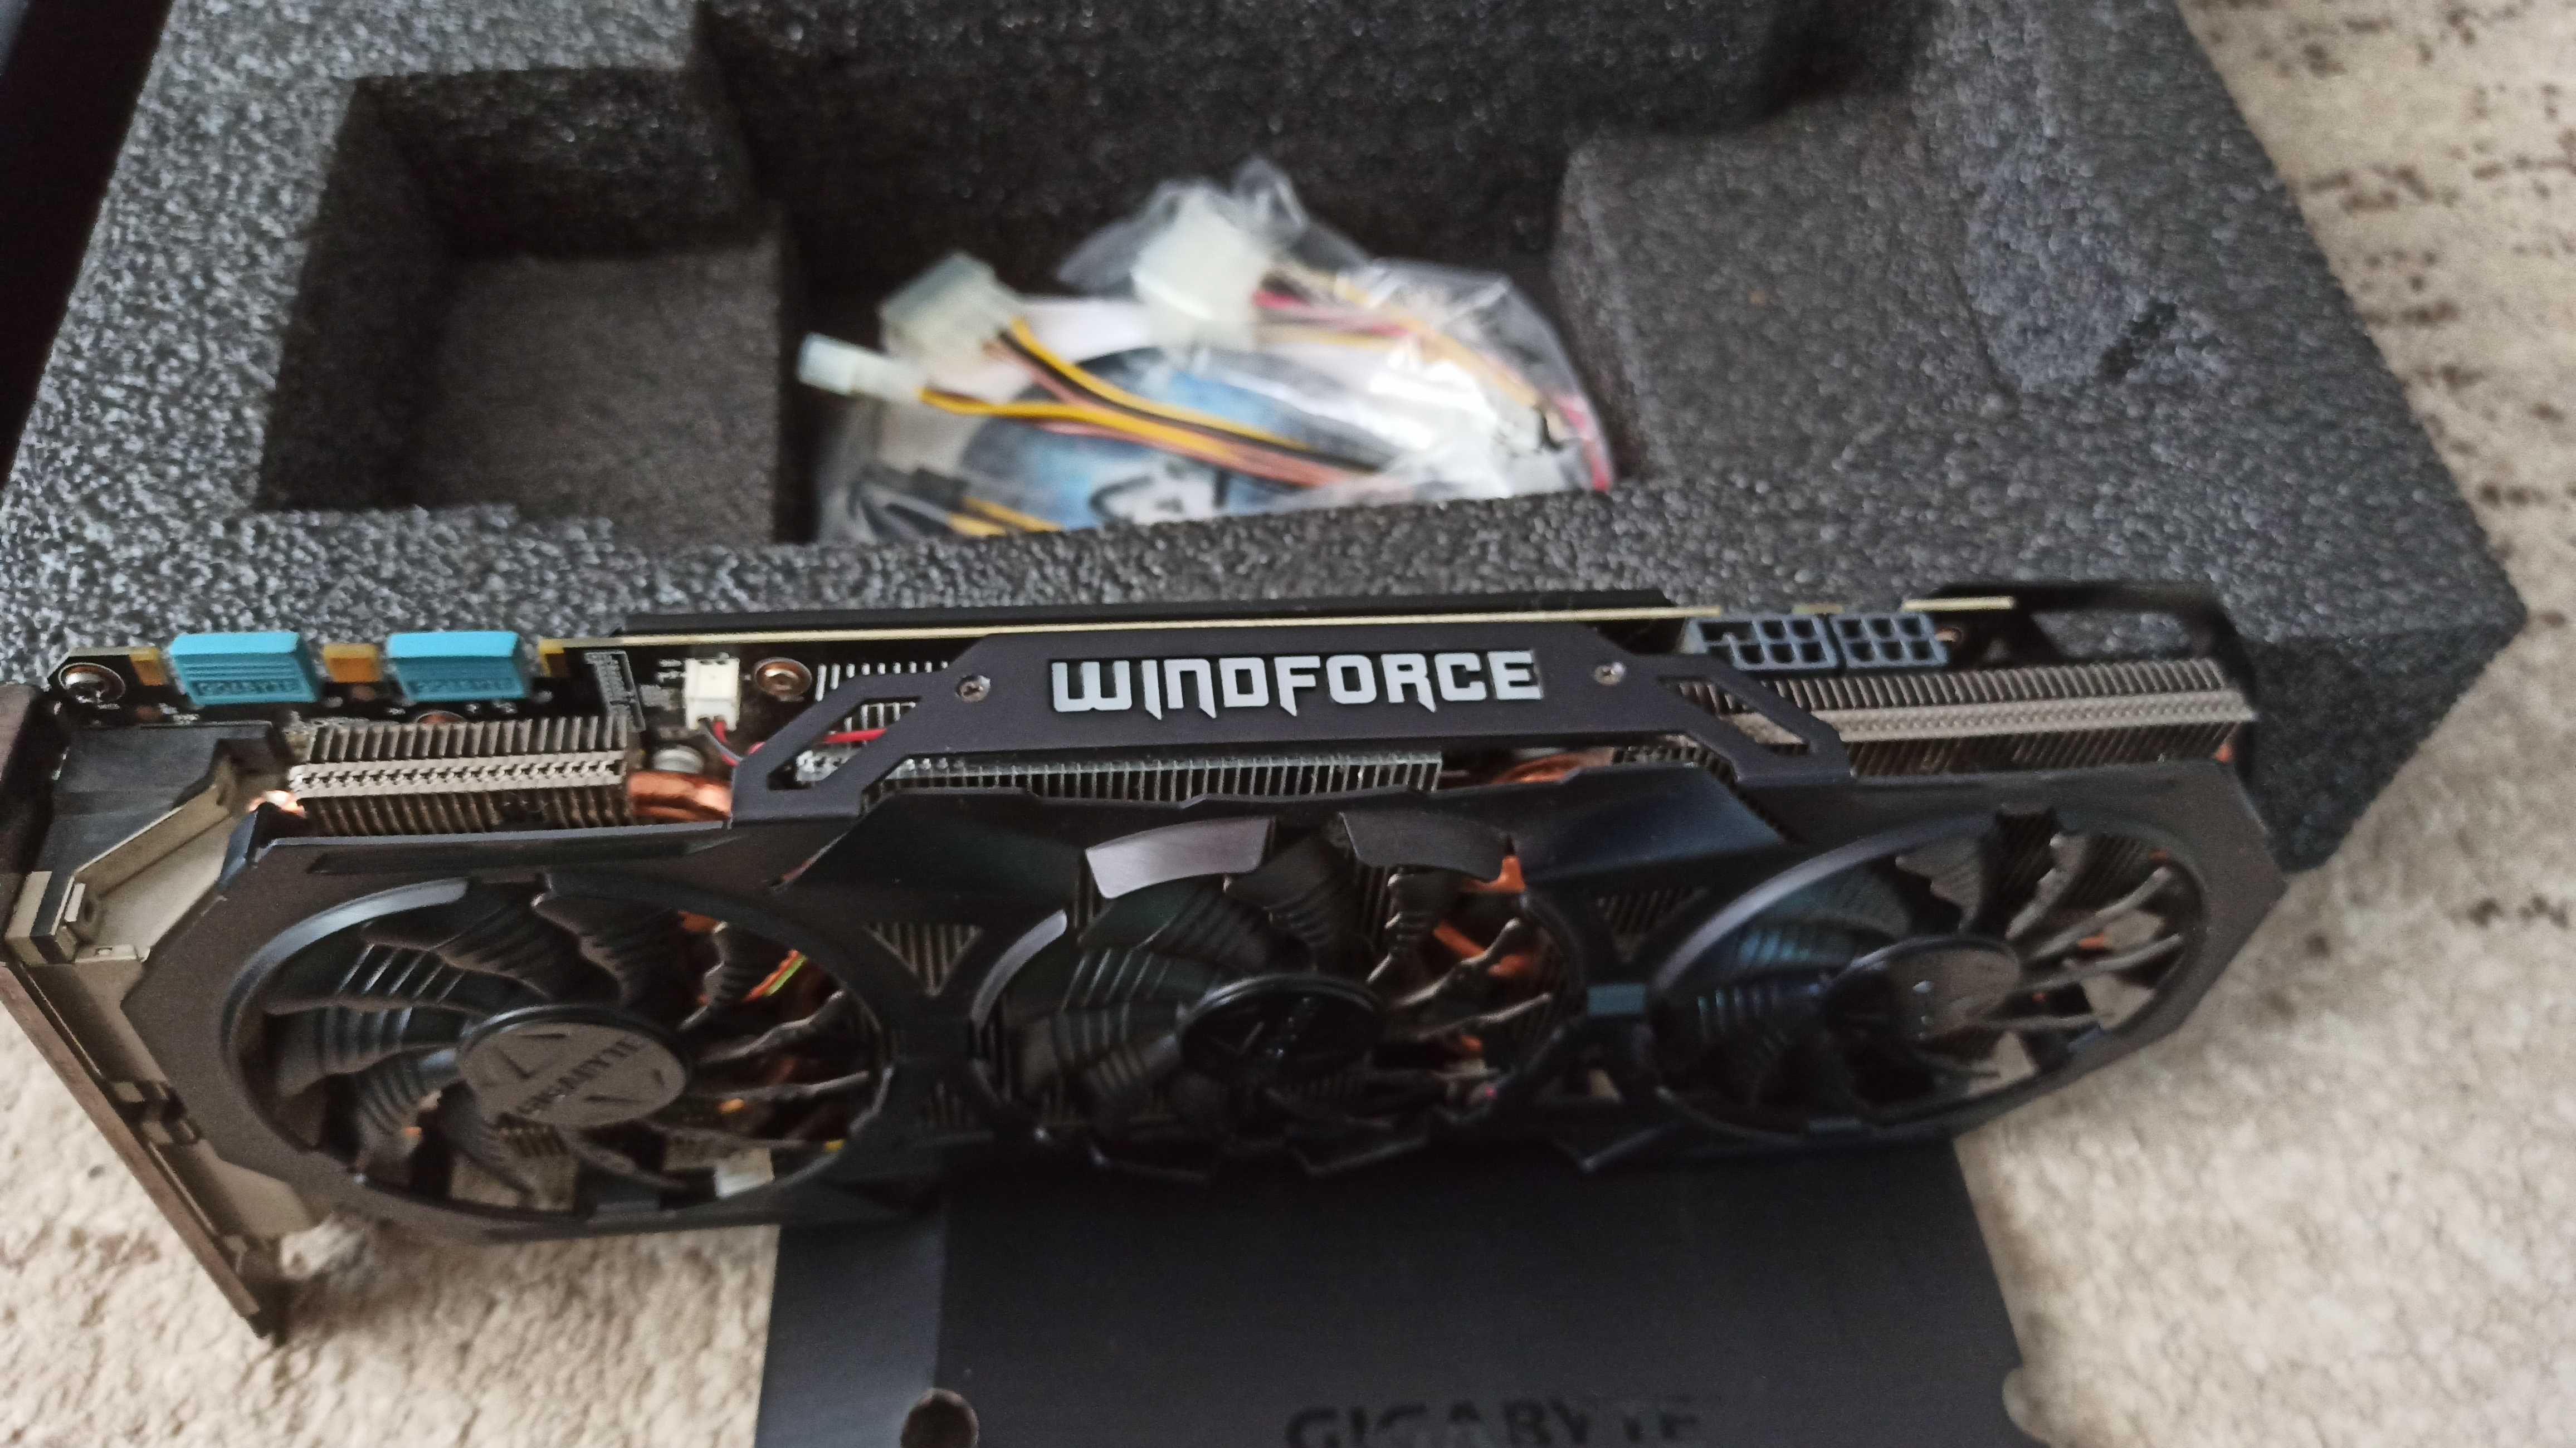 GTX 970  Gigabyte  WindForce